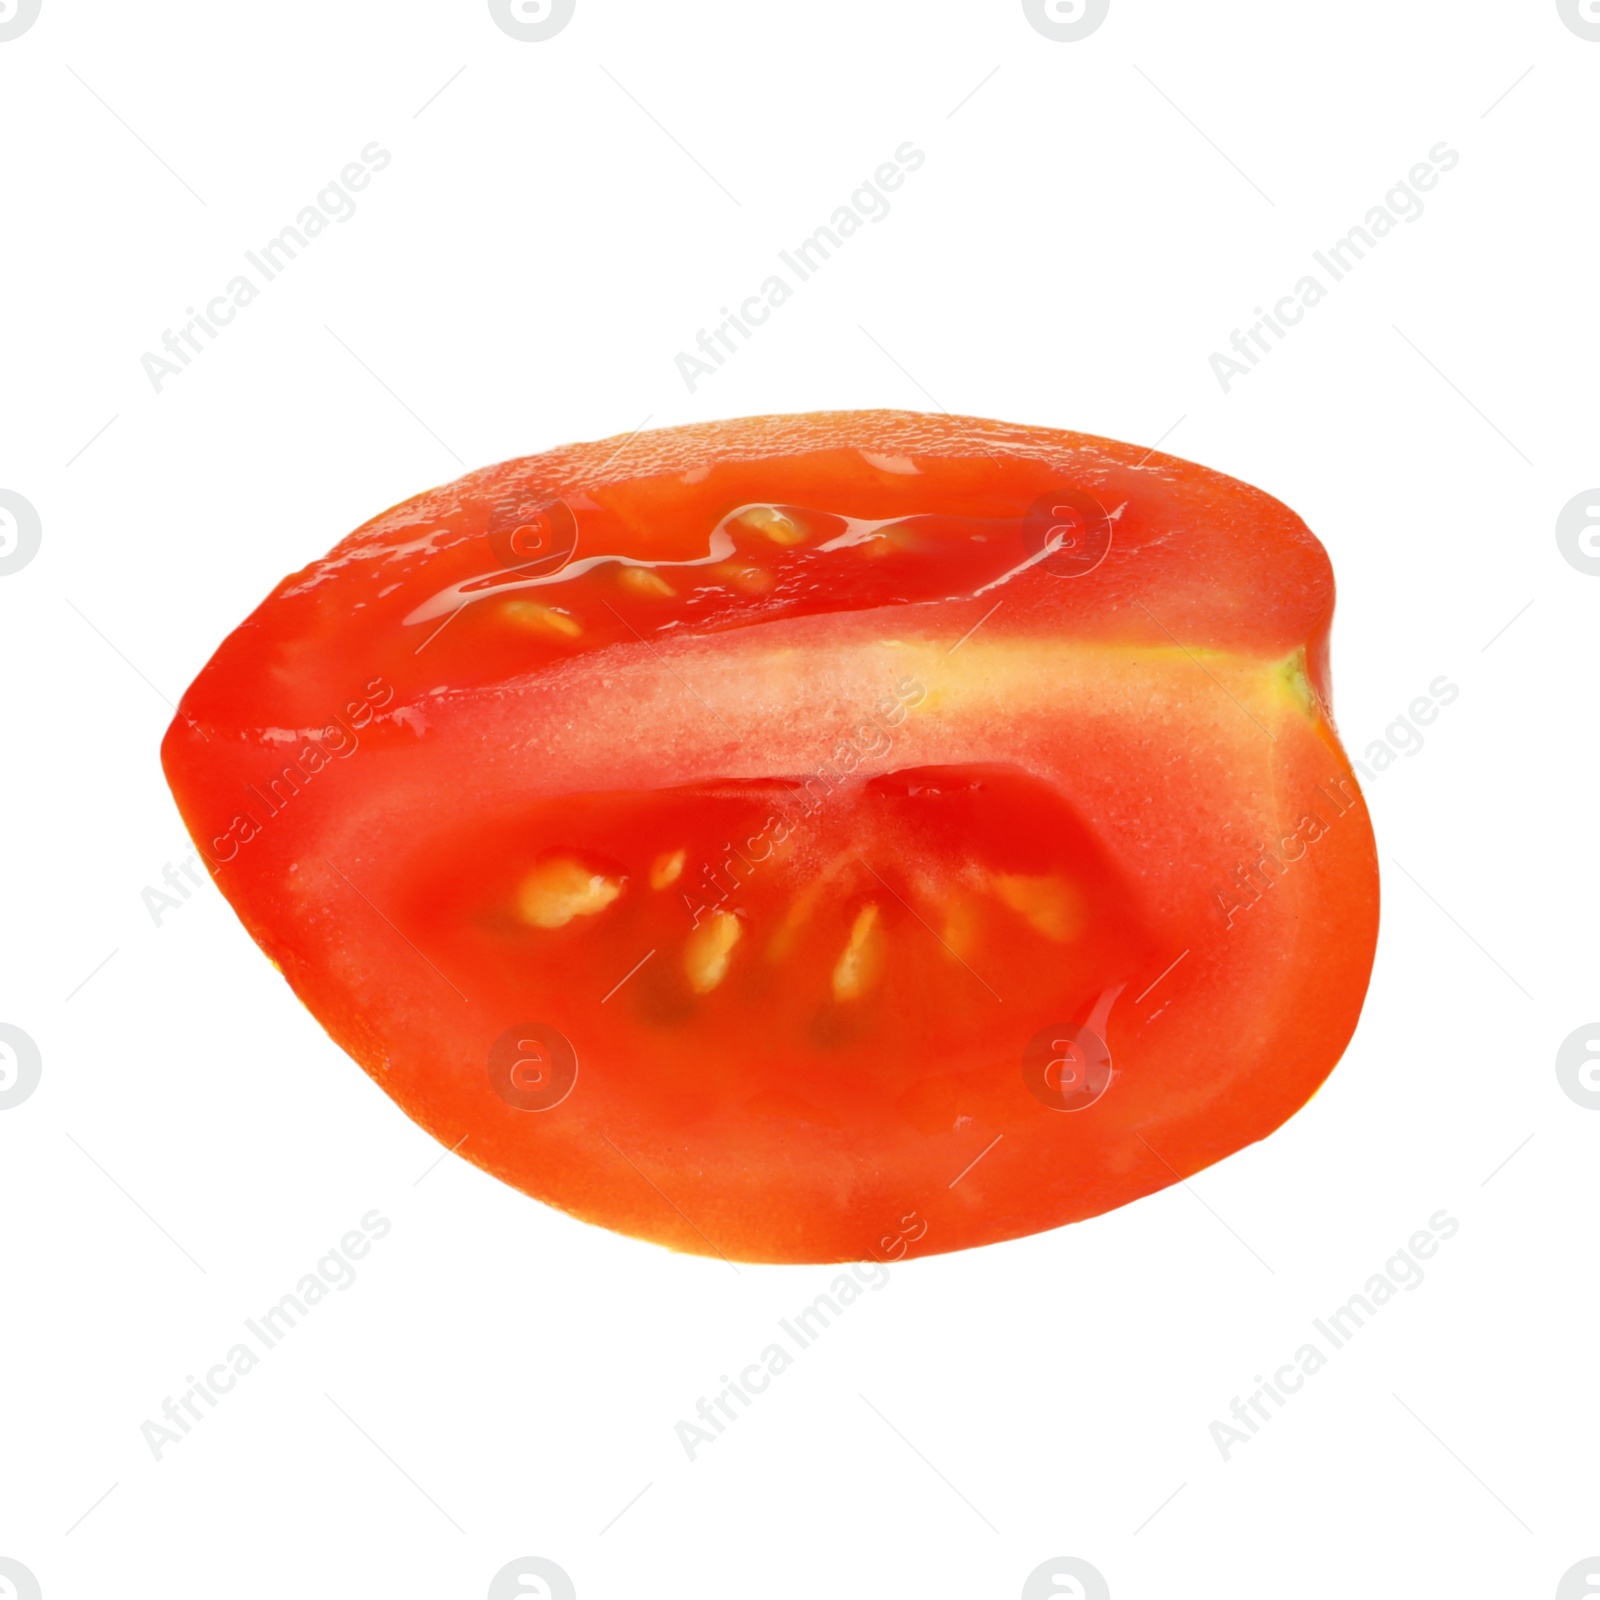 Photo of Piece of fresh ripe cherry tomato isolated on white